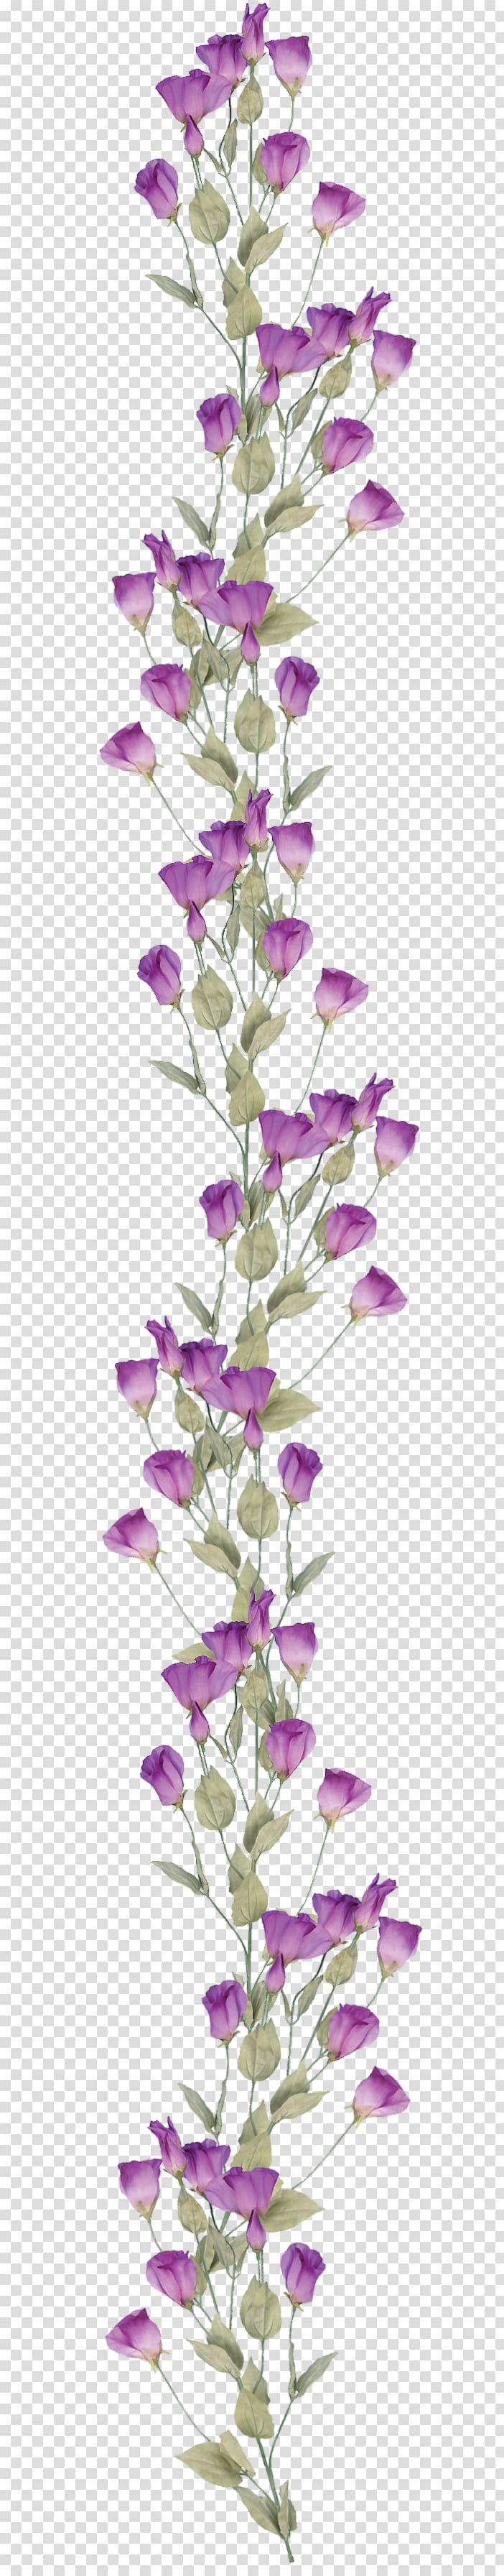 Flower bouquet Purple Nosegay, Bouquet of flowers, pink flowers transparent background PNG clipart